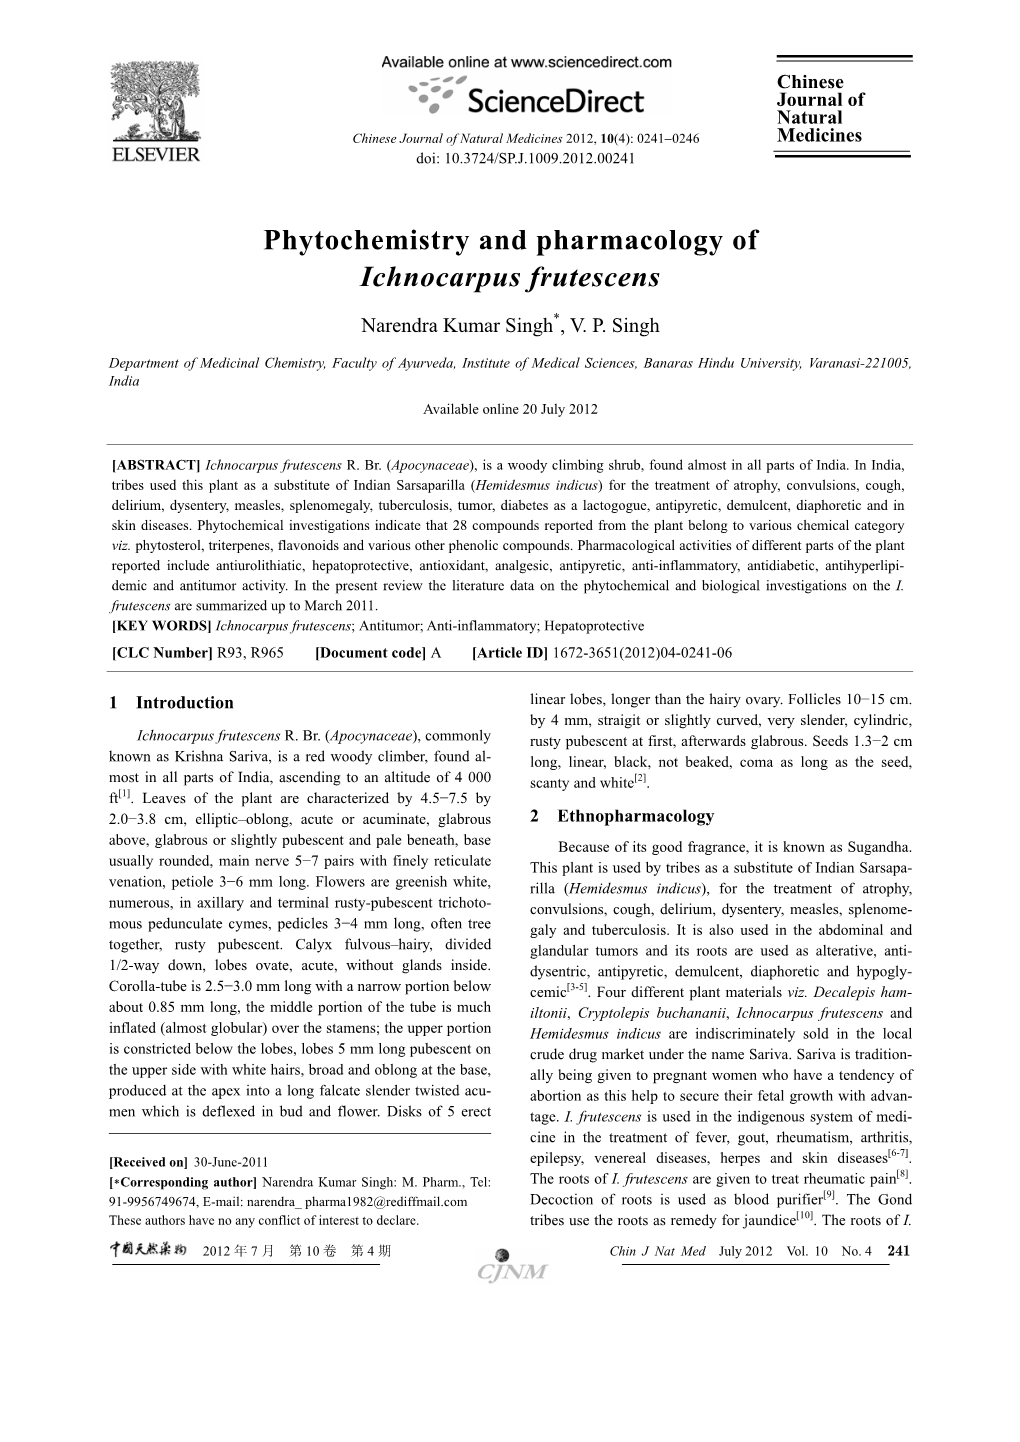 Phytochemistry and Pharmacology of Ichnocarpus Frutescens